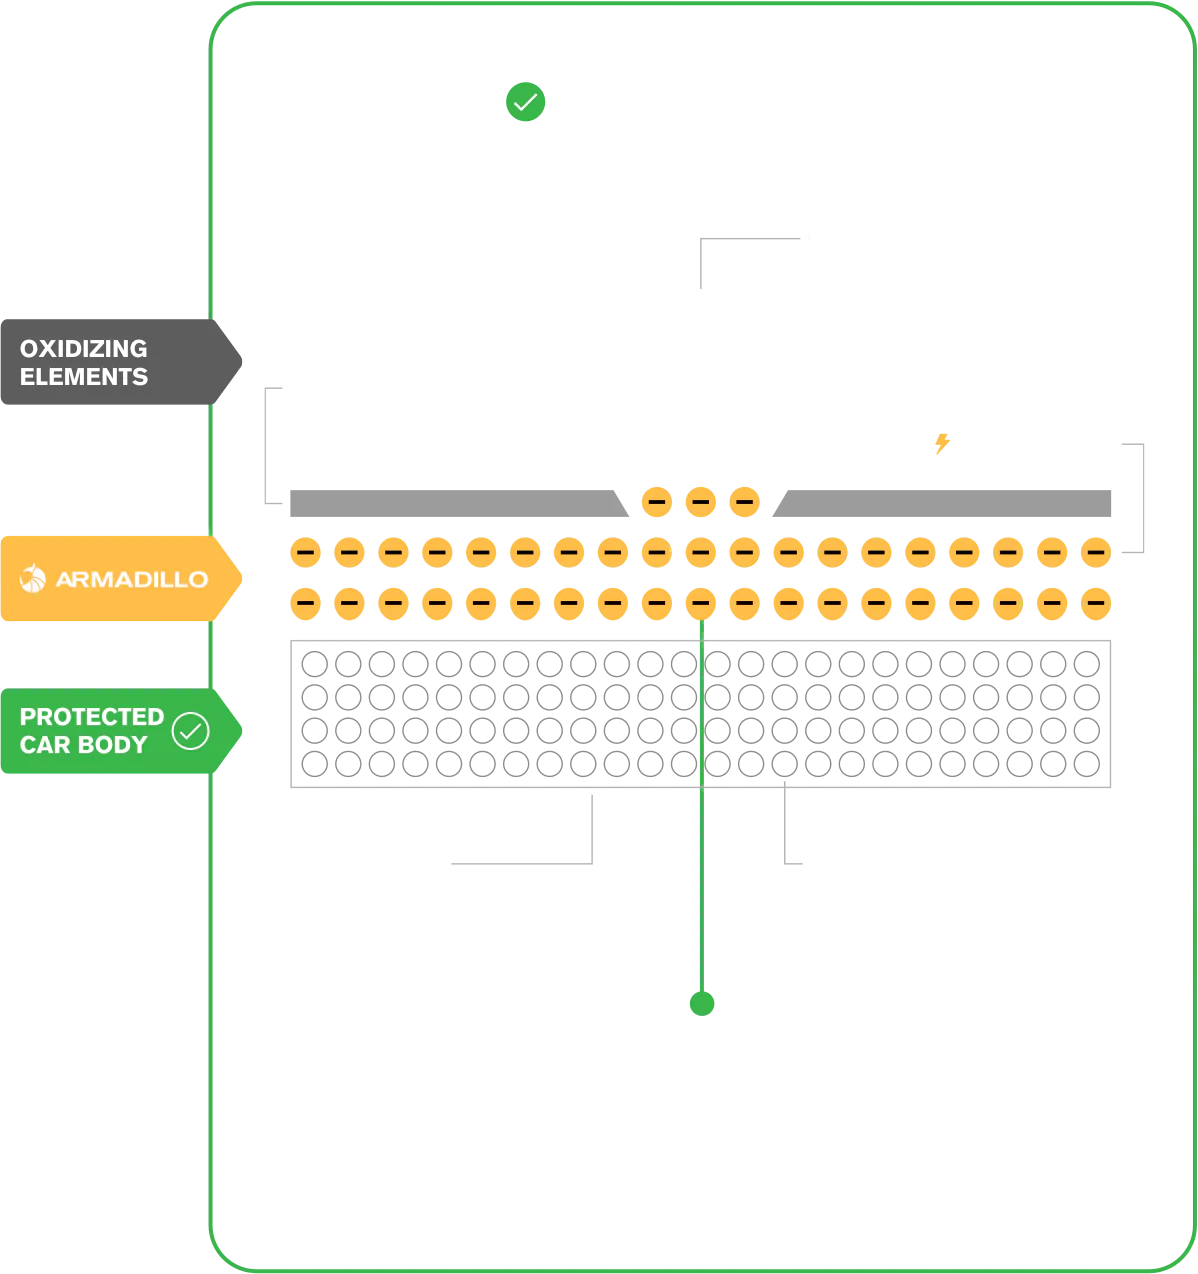 Armadillo proven anti corrosion technology for vehicles